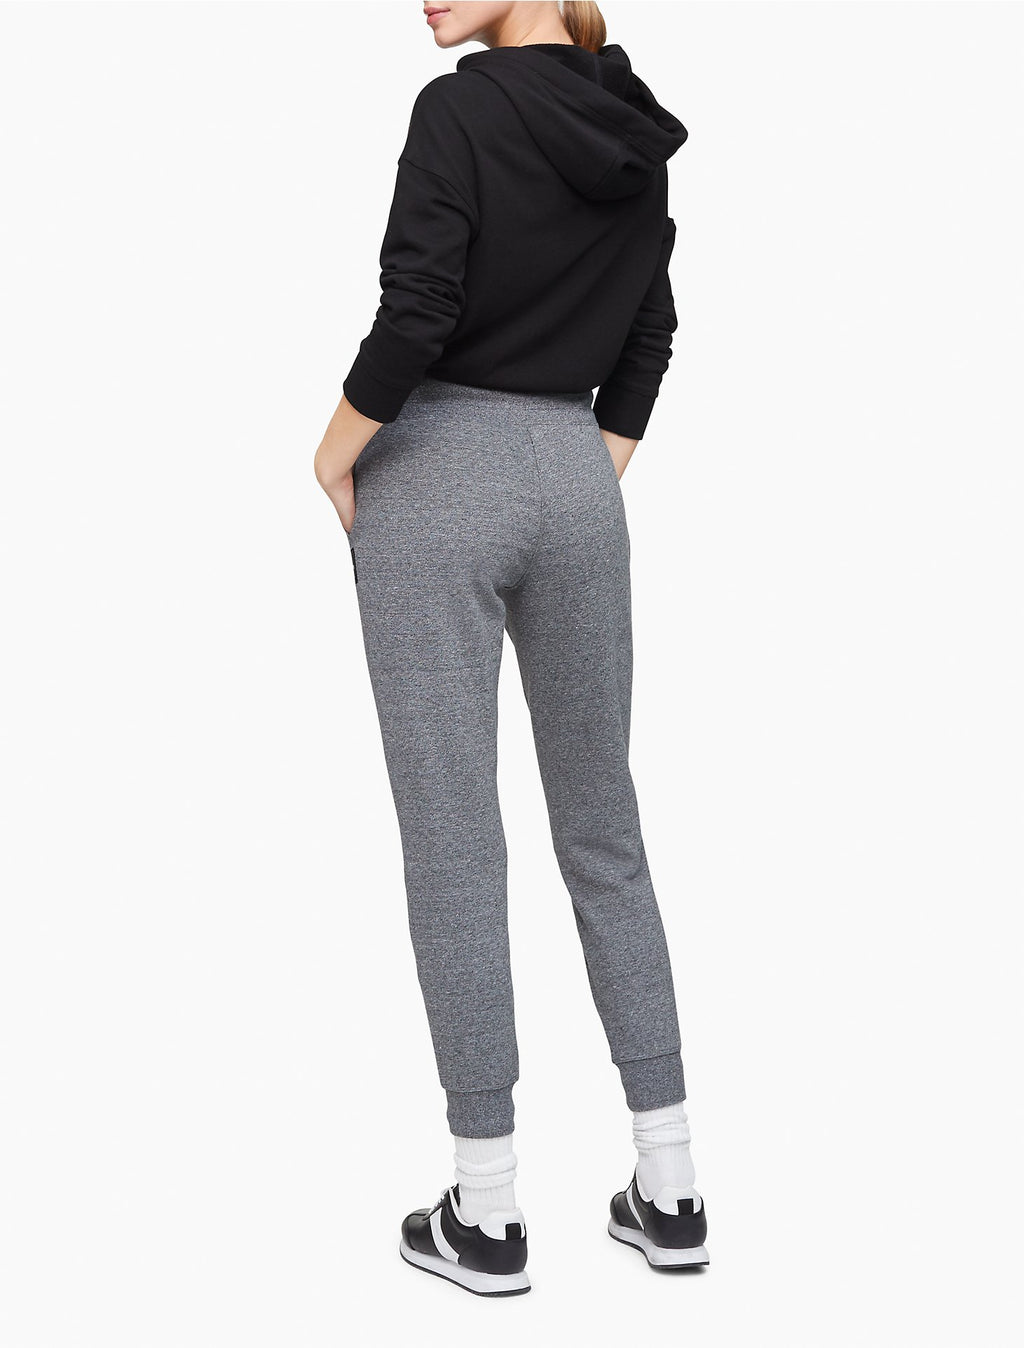 Calvin Klein Performance Women's Fleece-Lined Joggers Pants Gray